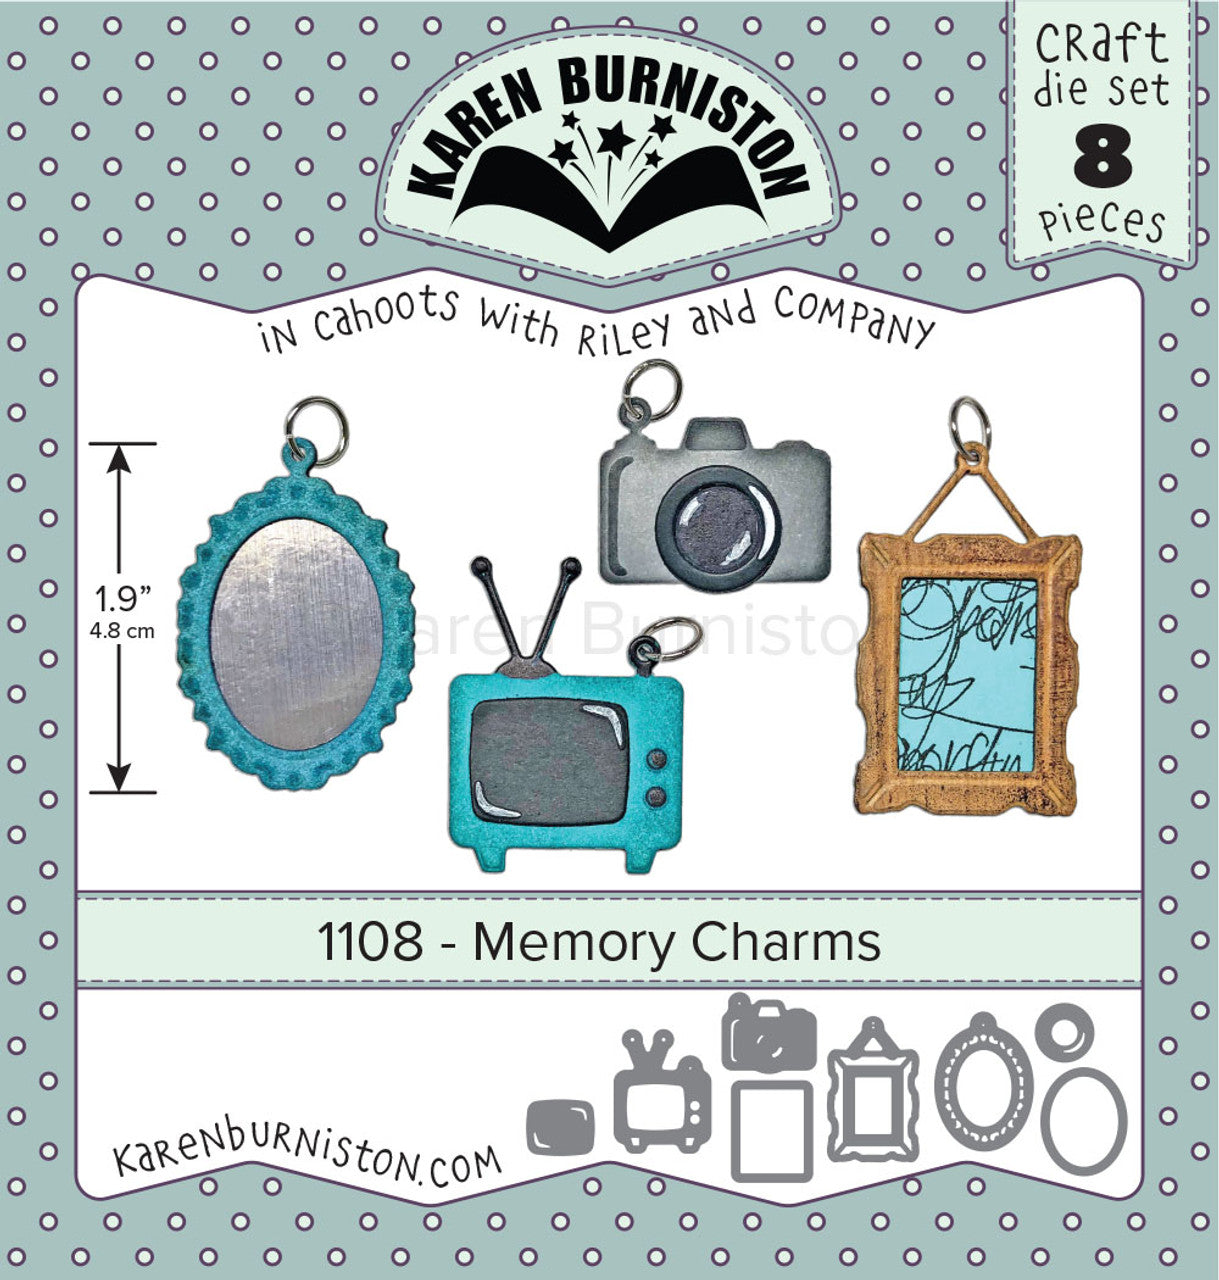 1108 Karen Burniston - Memory Charms